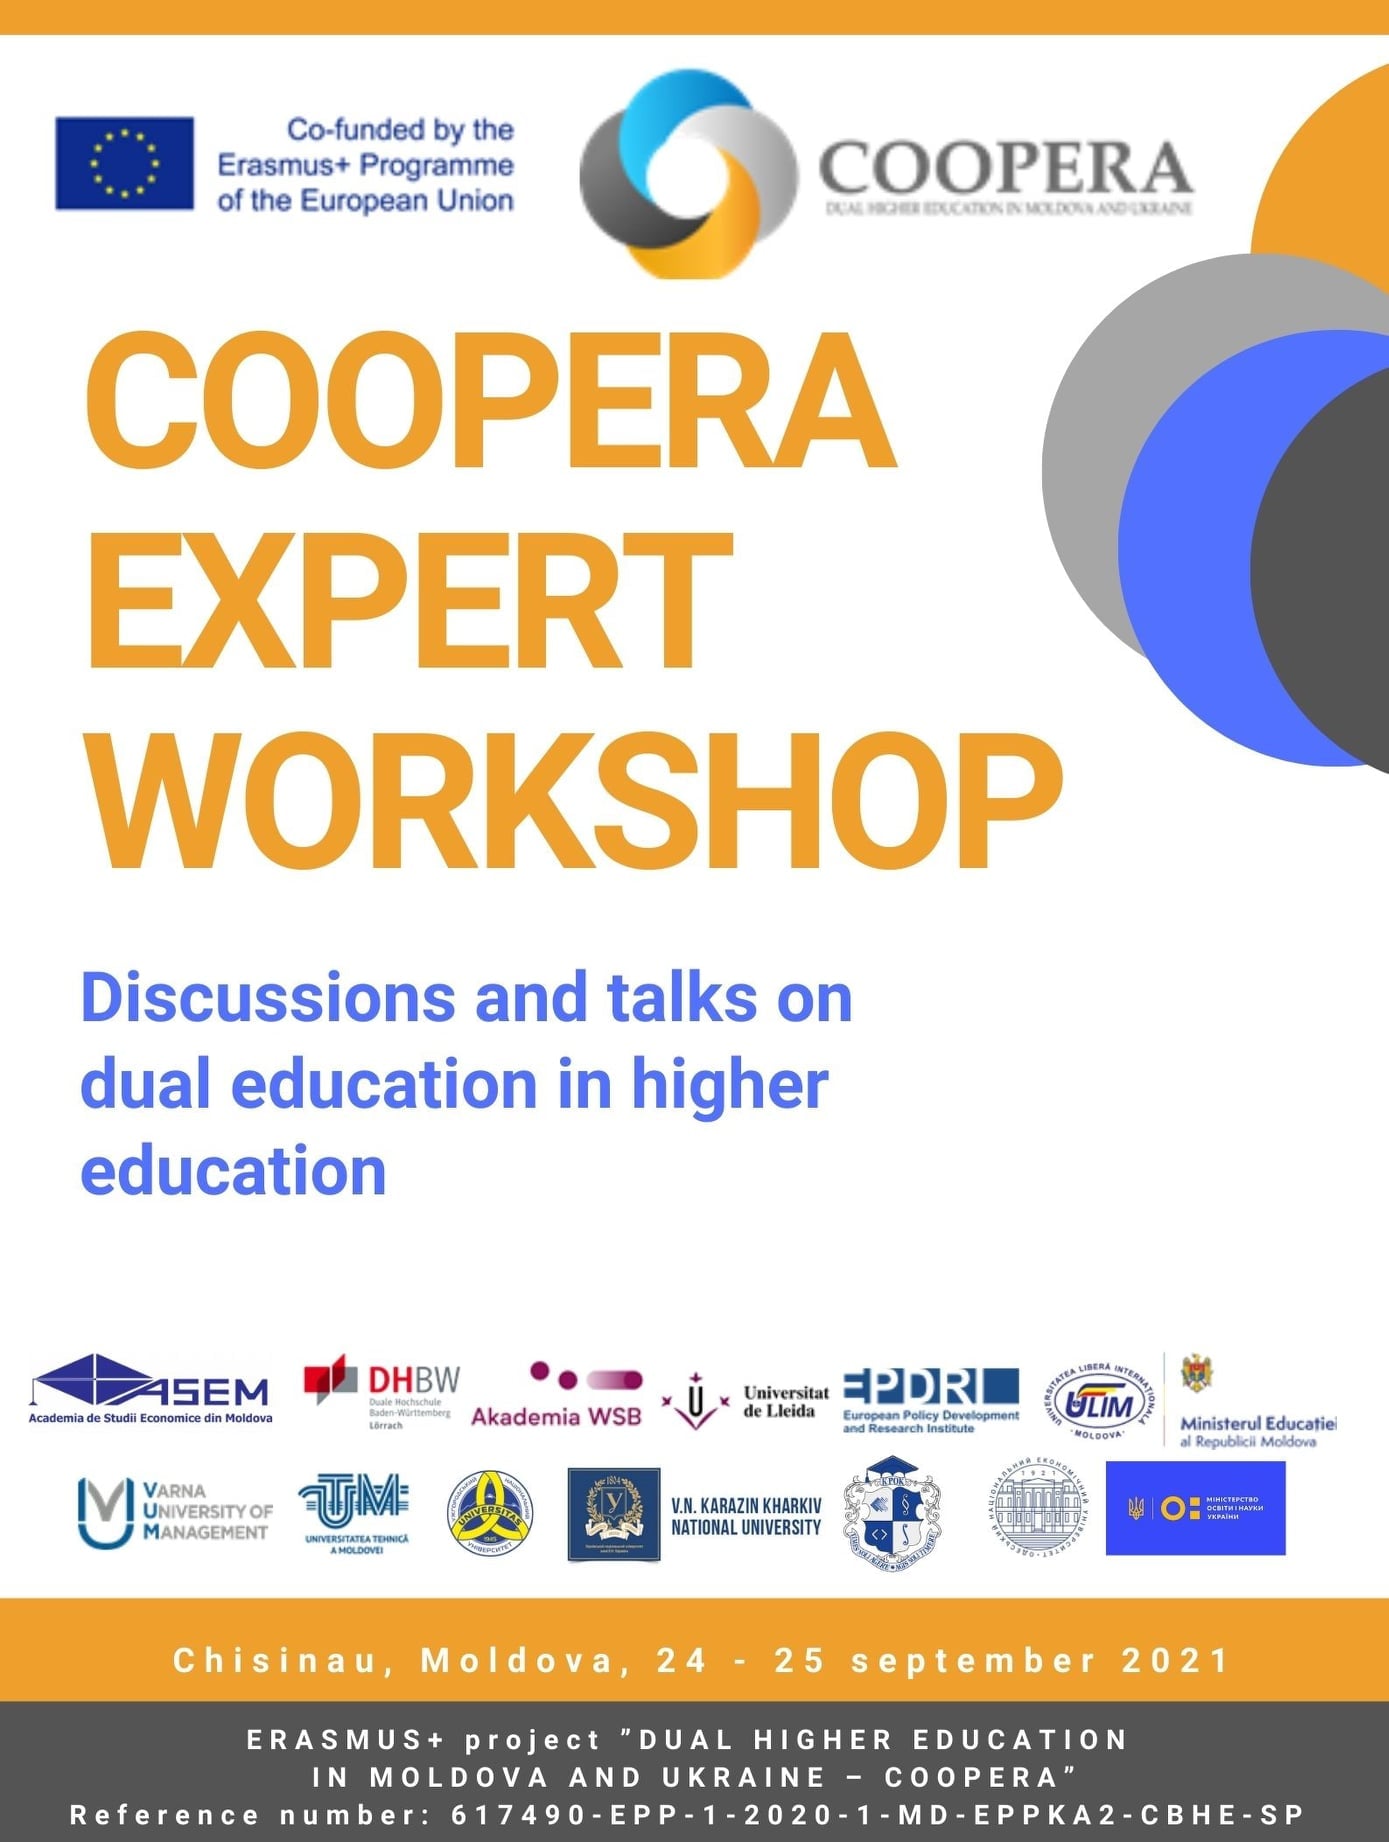 COOPERA Expert Workshop organizat la ULIM